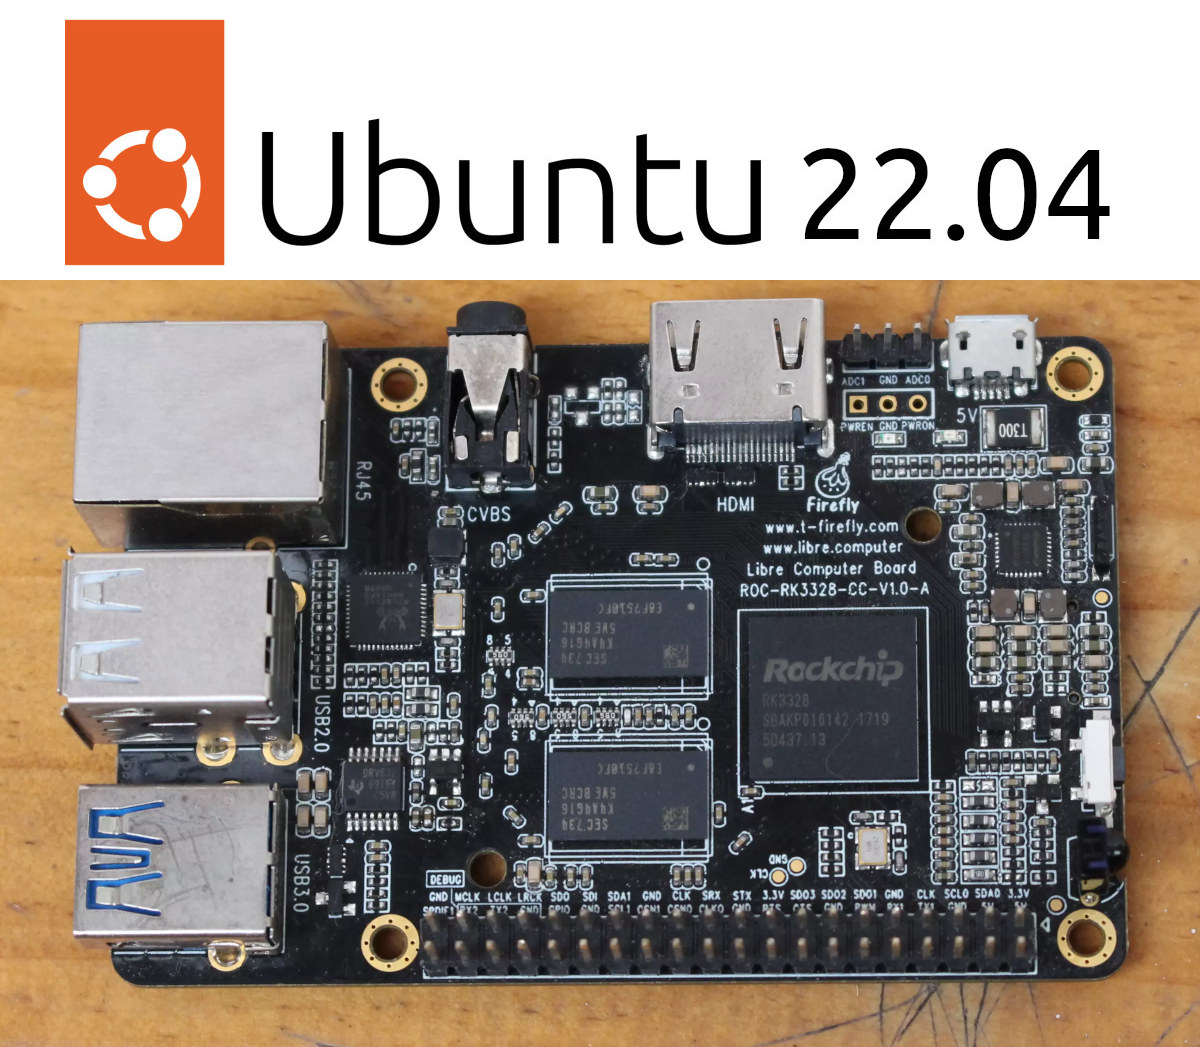 Libre Computer Ubuntu 22.04